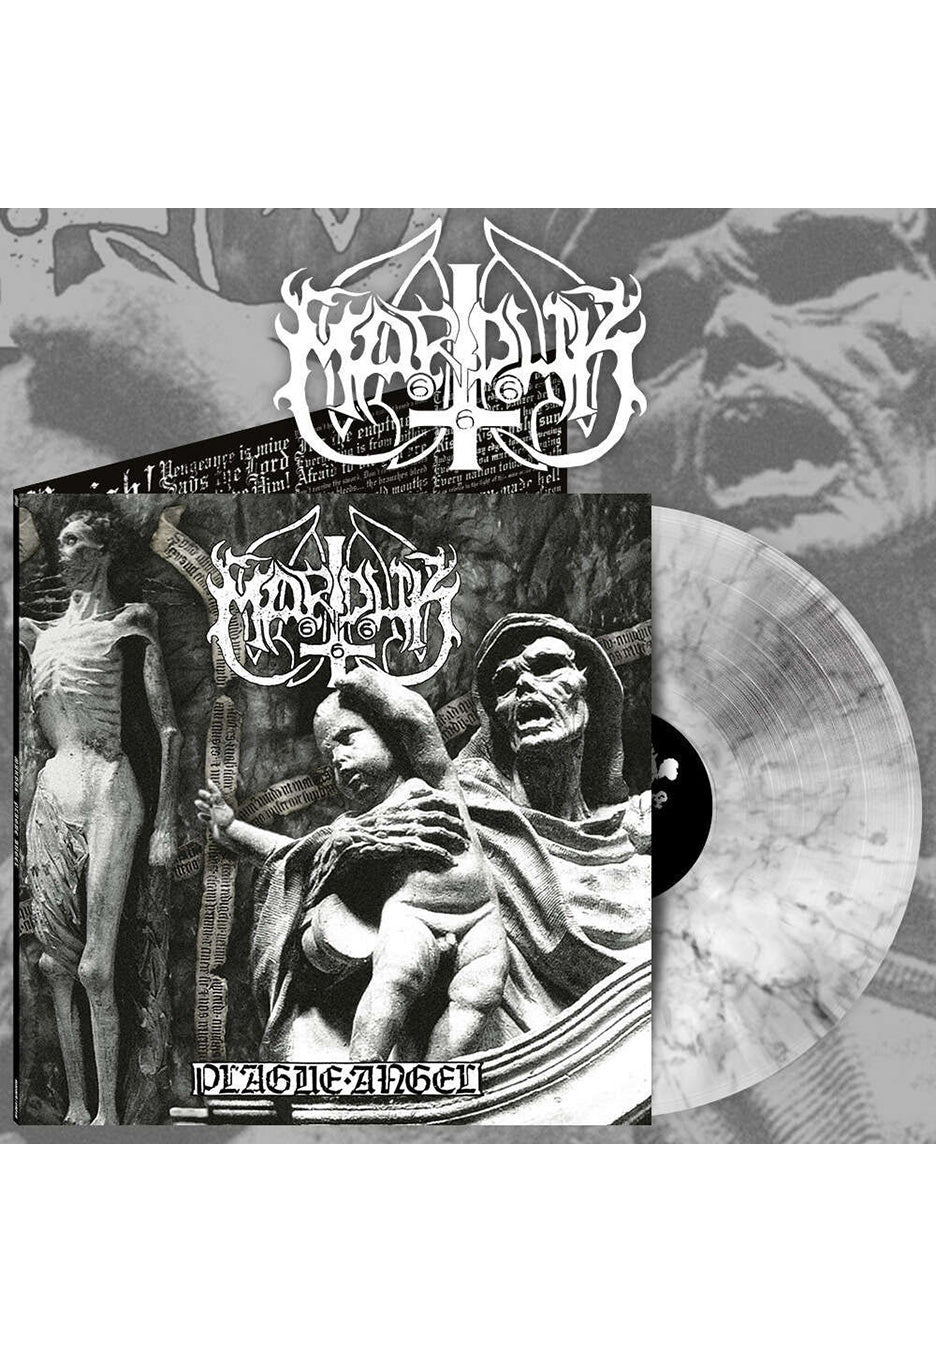 Marduk - Plague Angel White/Black - Colored Vinyl